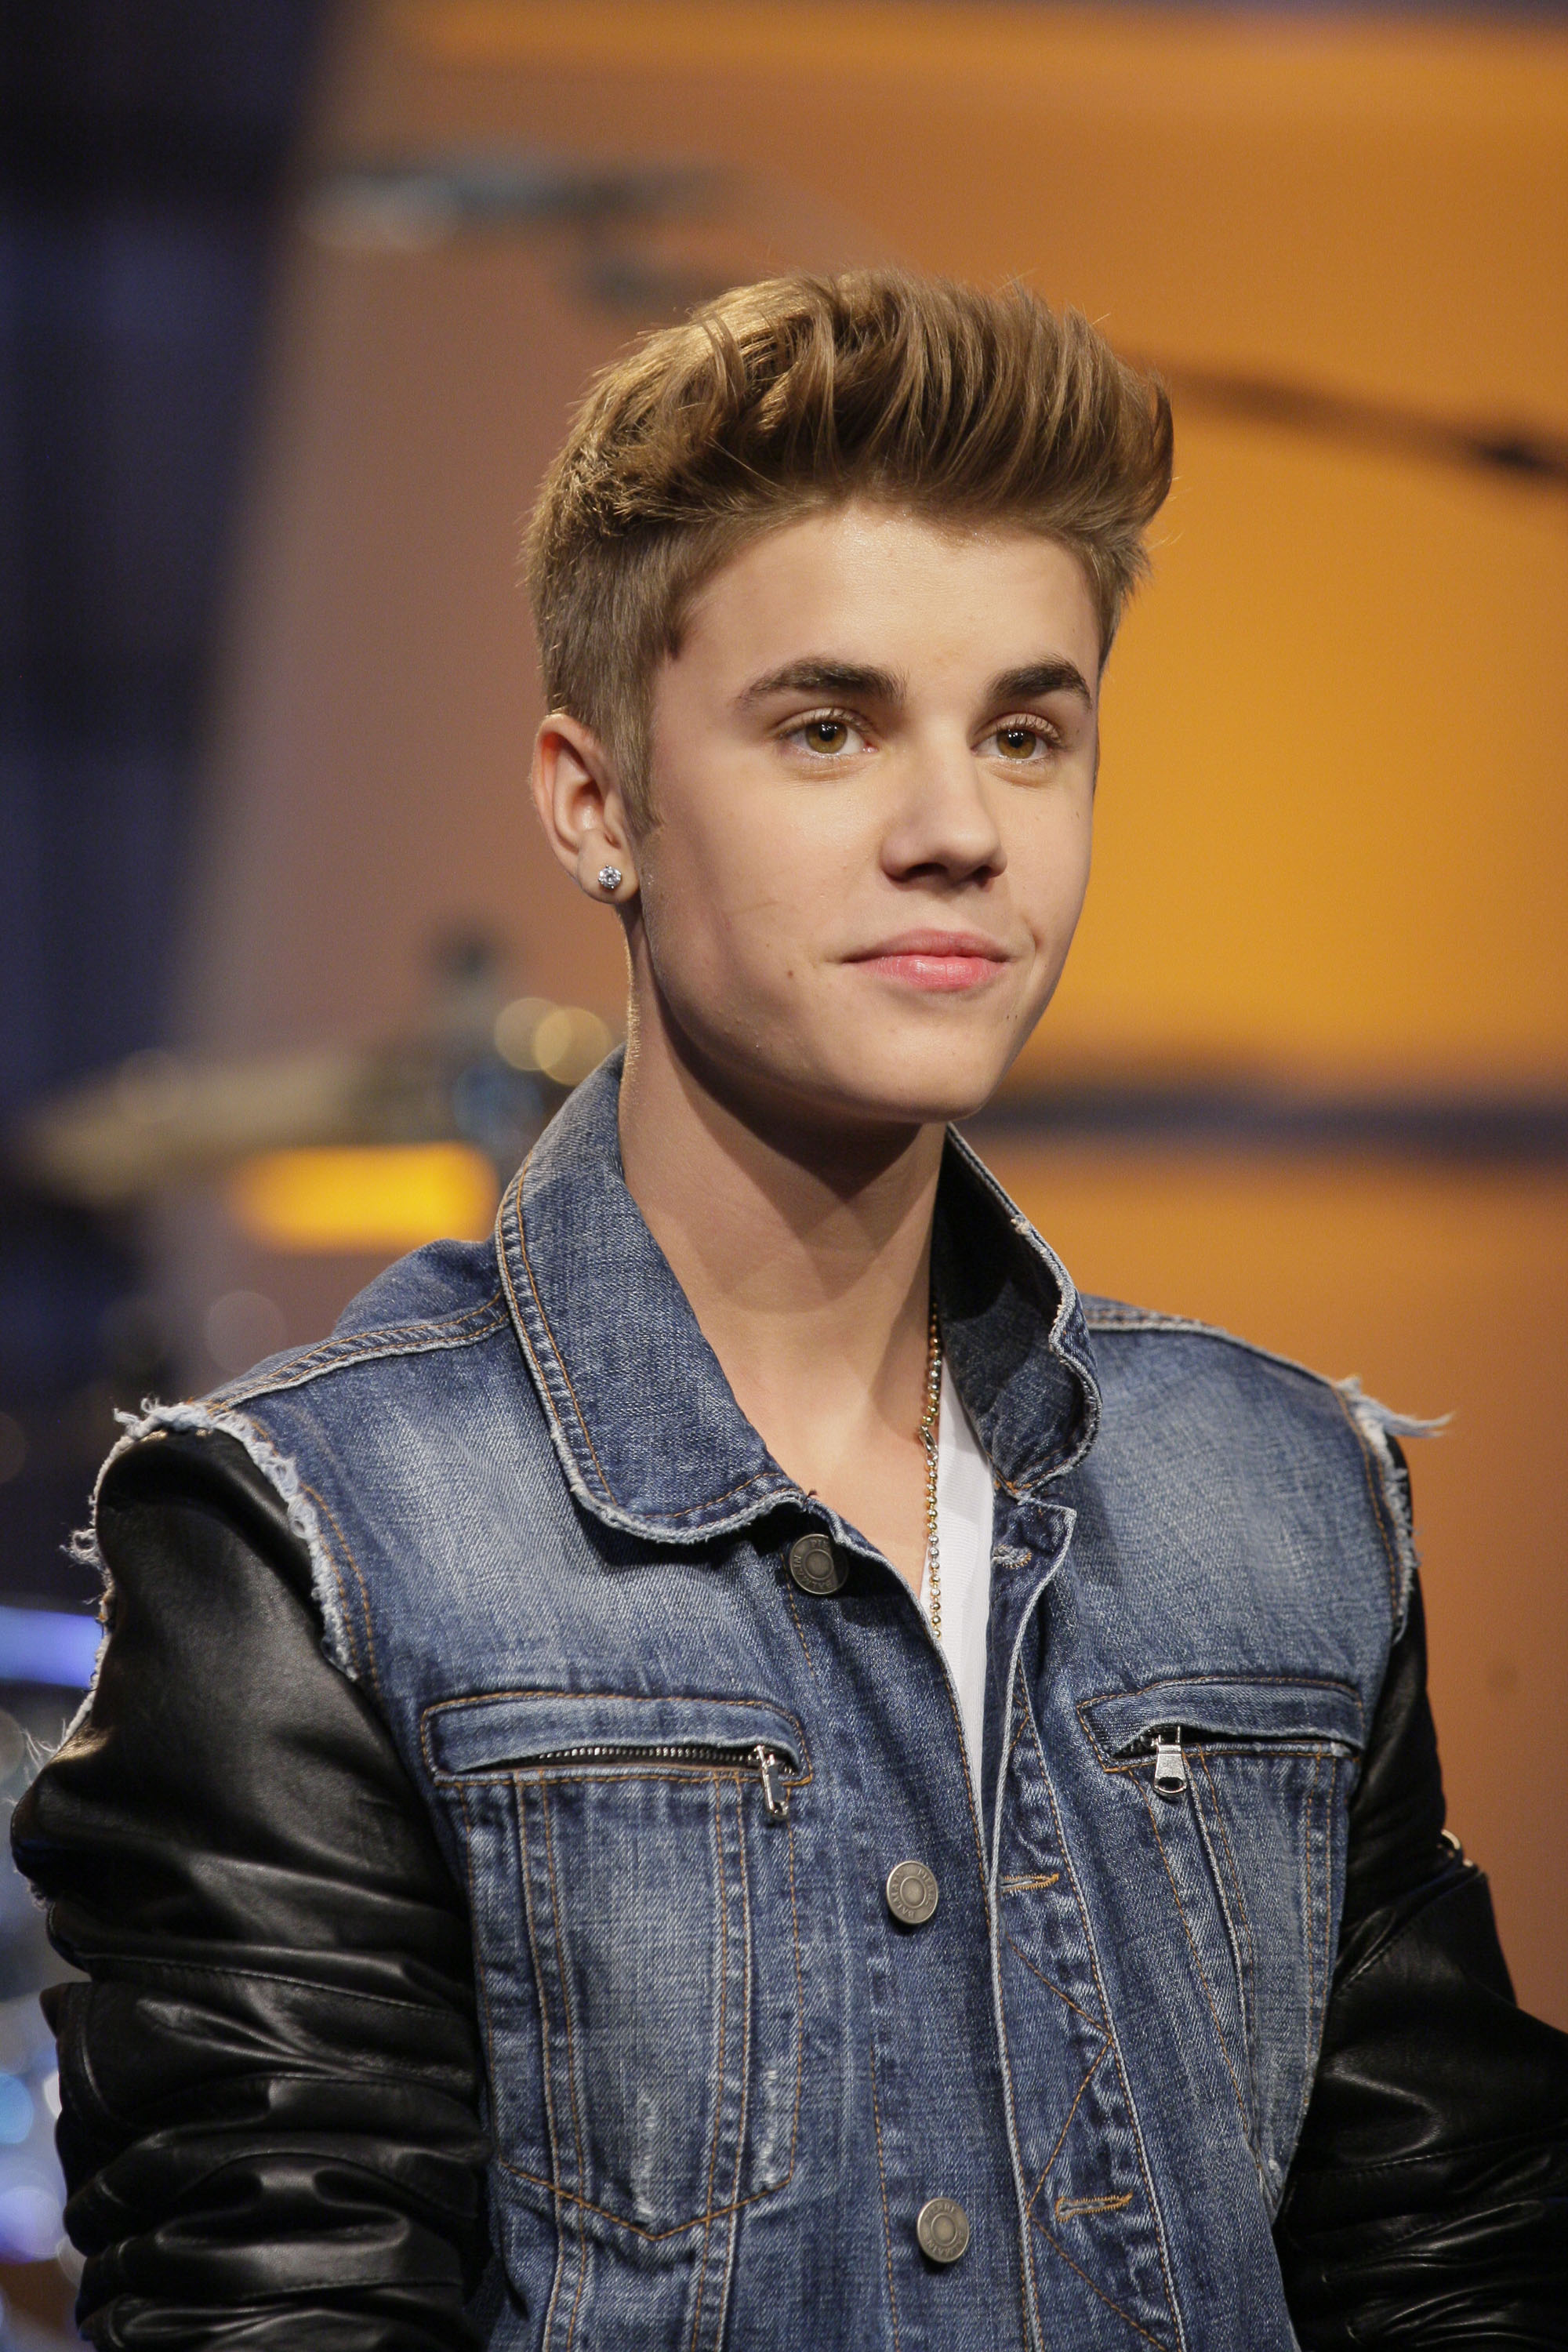 Justin Bieber 2014 Haircut Tutorial - TheSalonGuy - YouTube